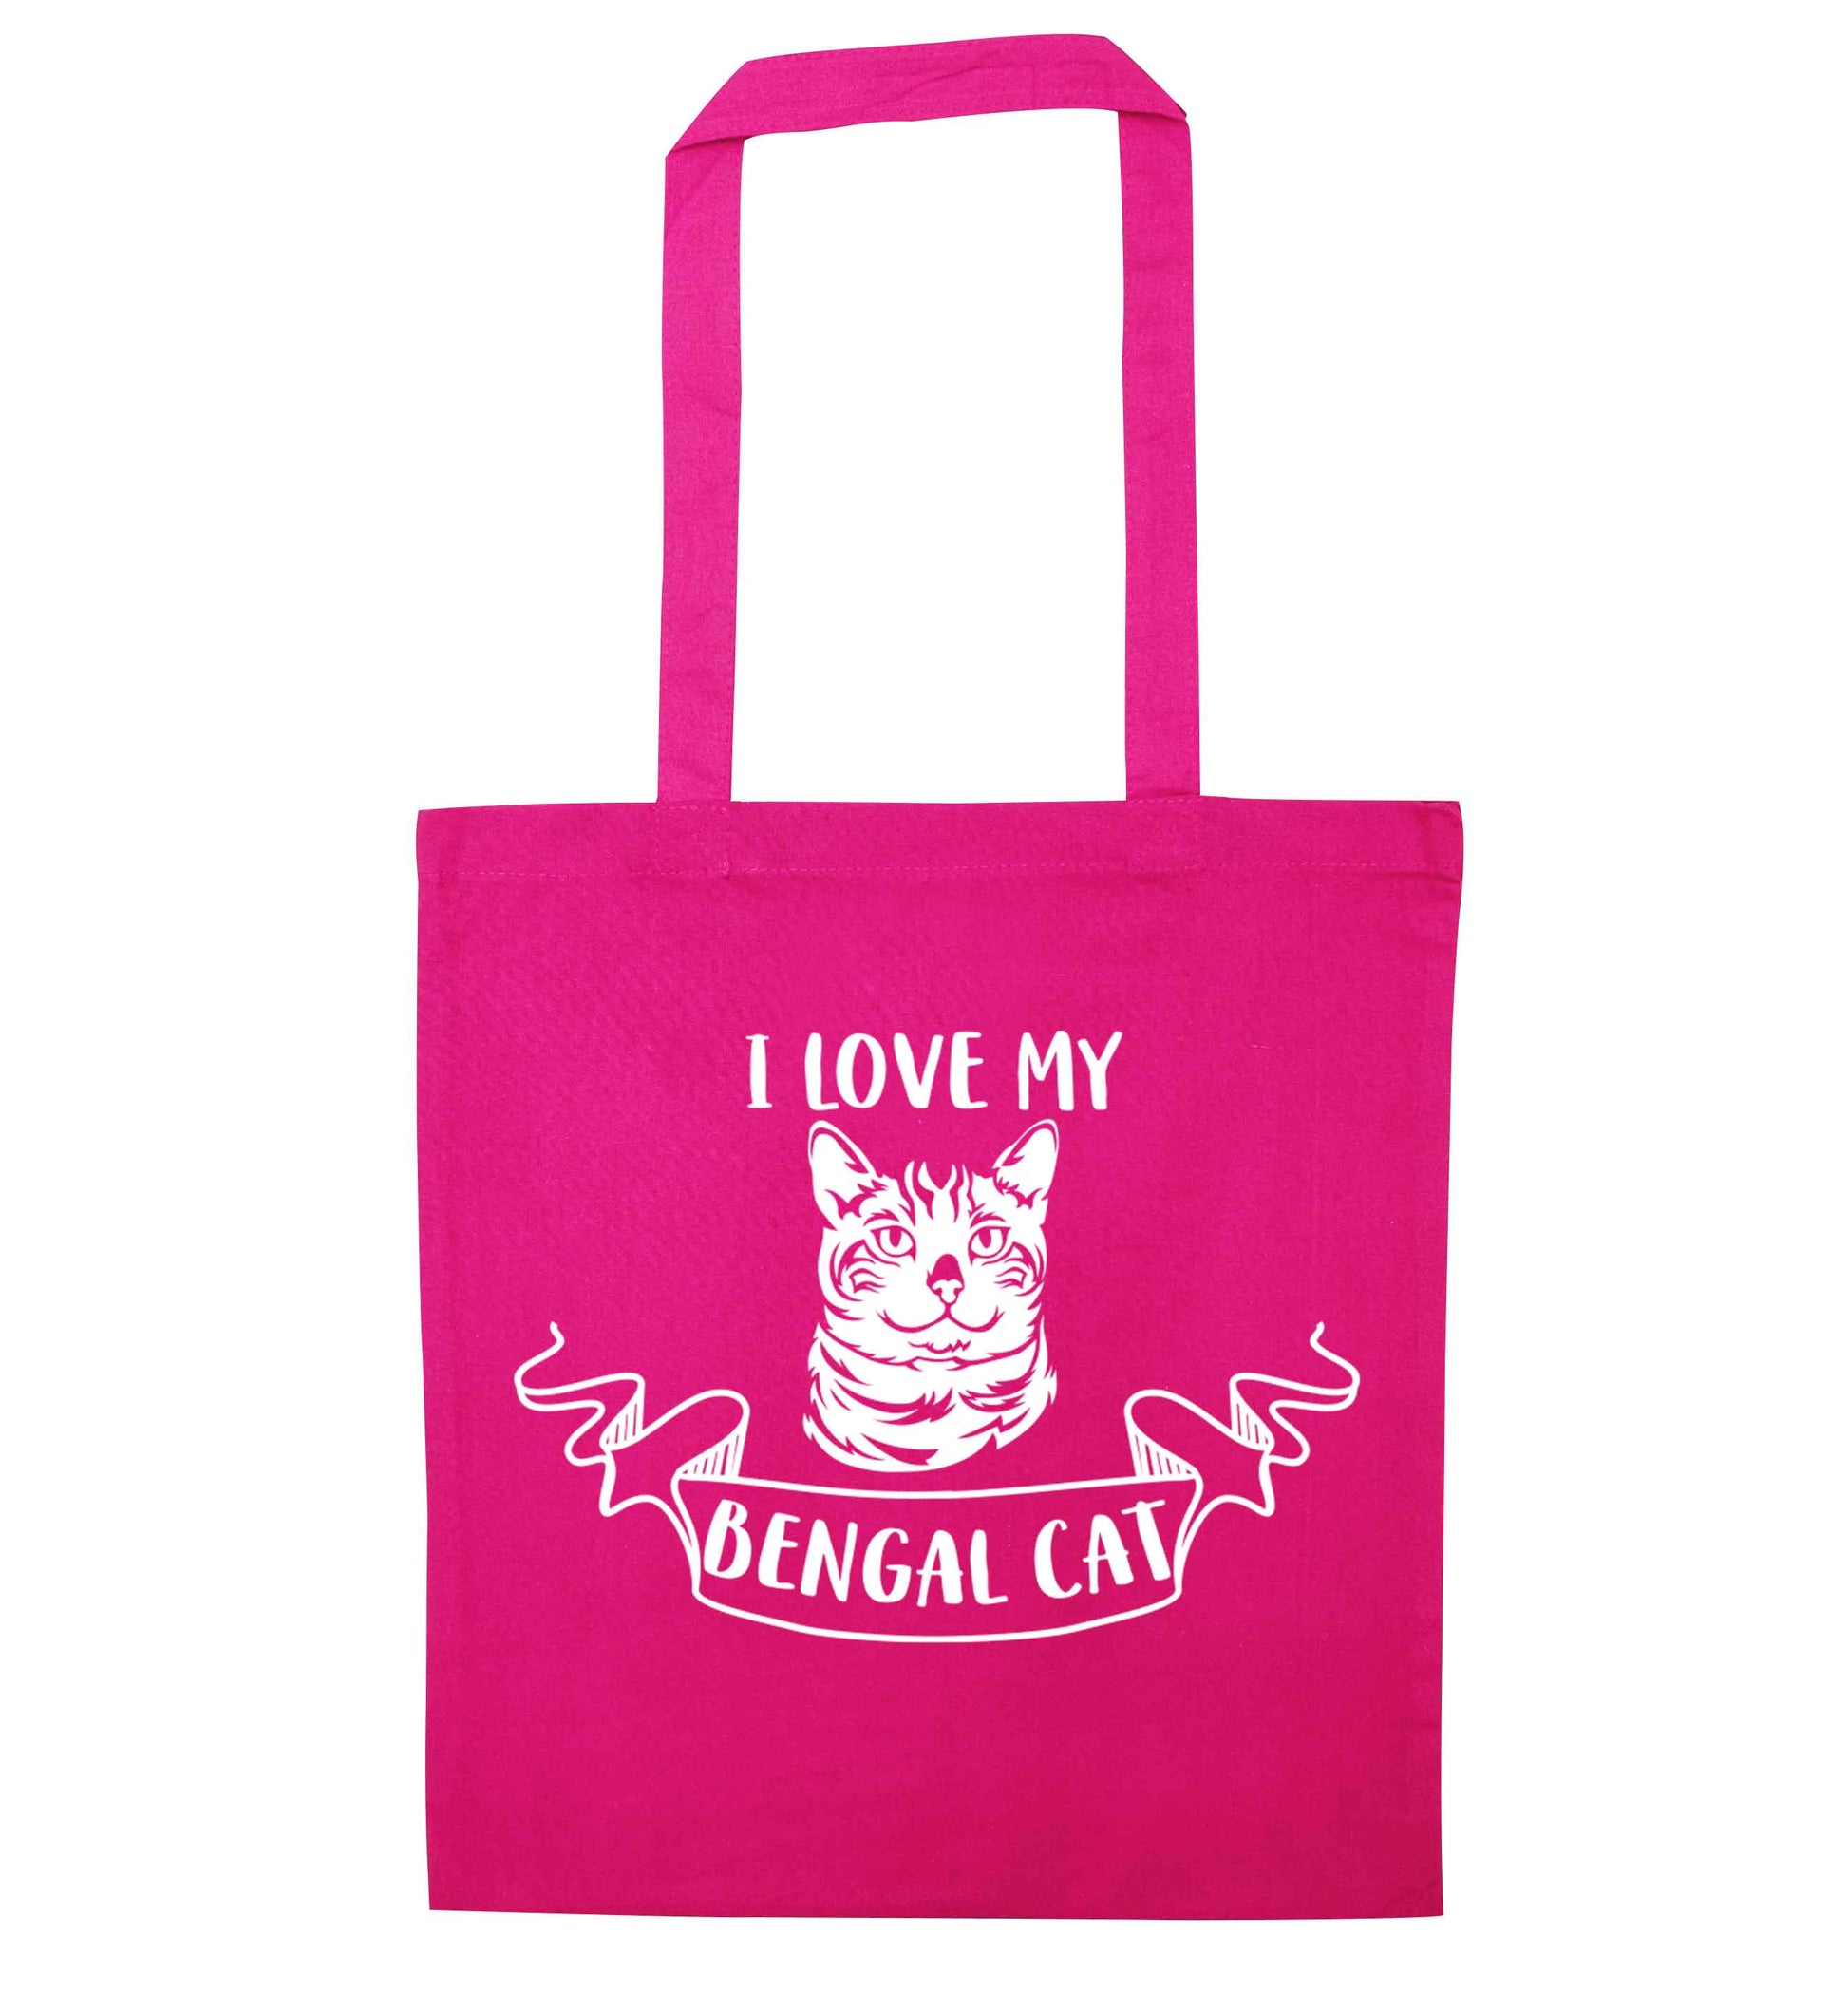 I love my begnal cat pink tote bag